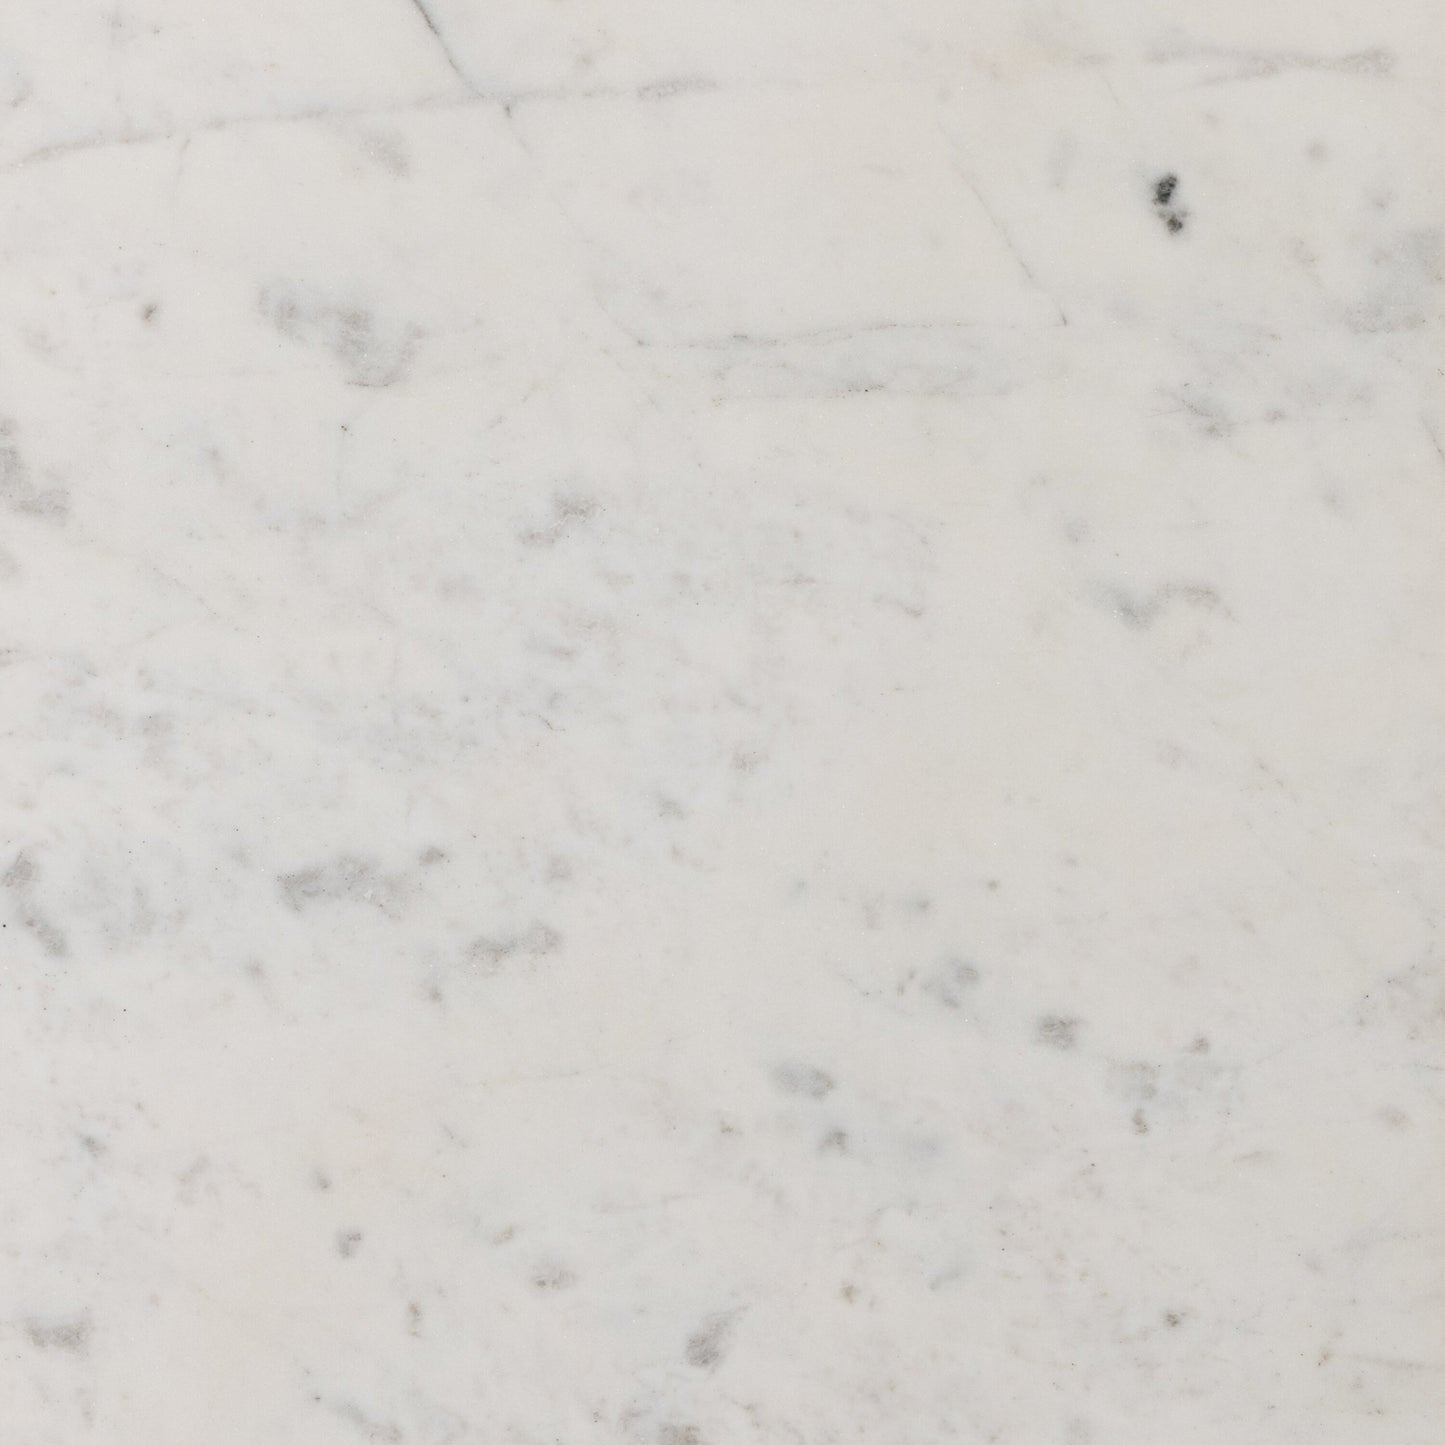 Jasper nightstand: iron matte black-polished white marble